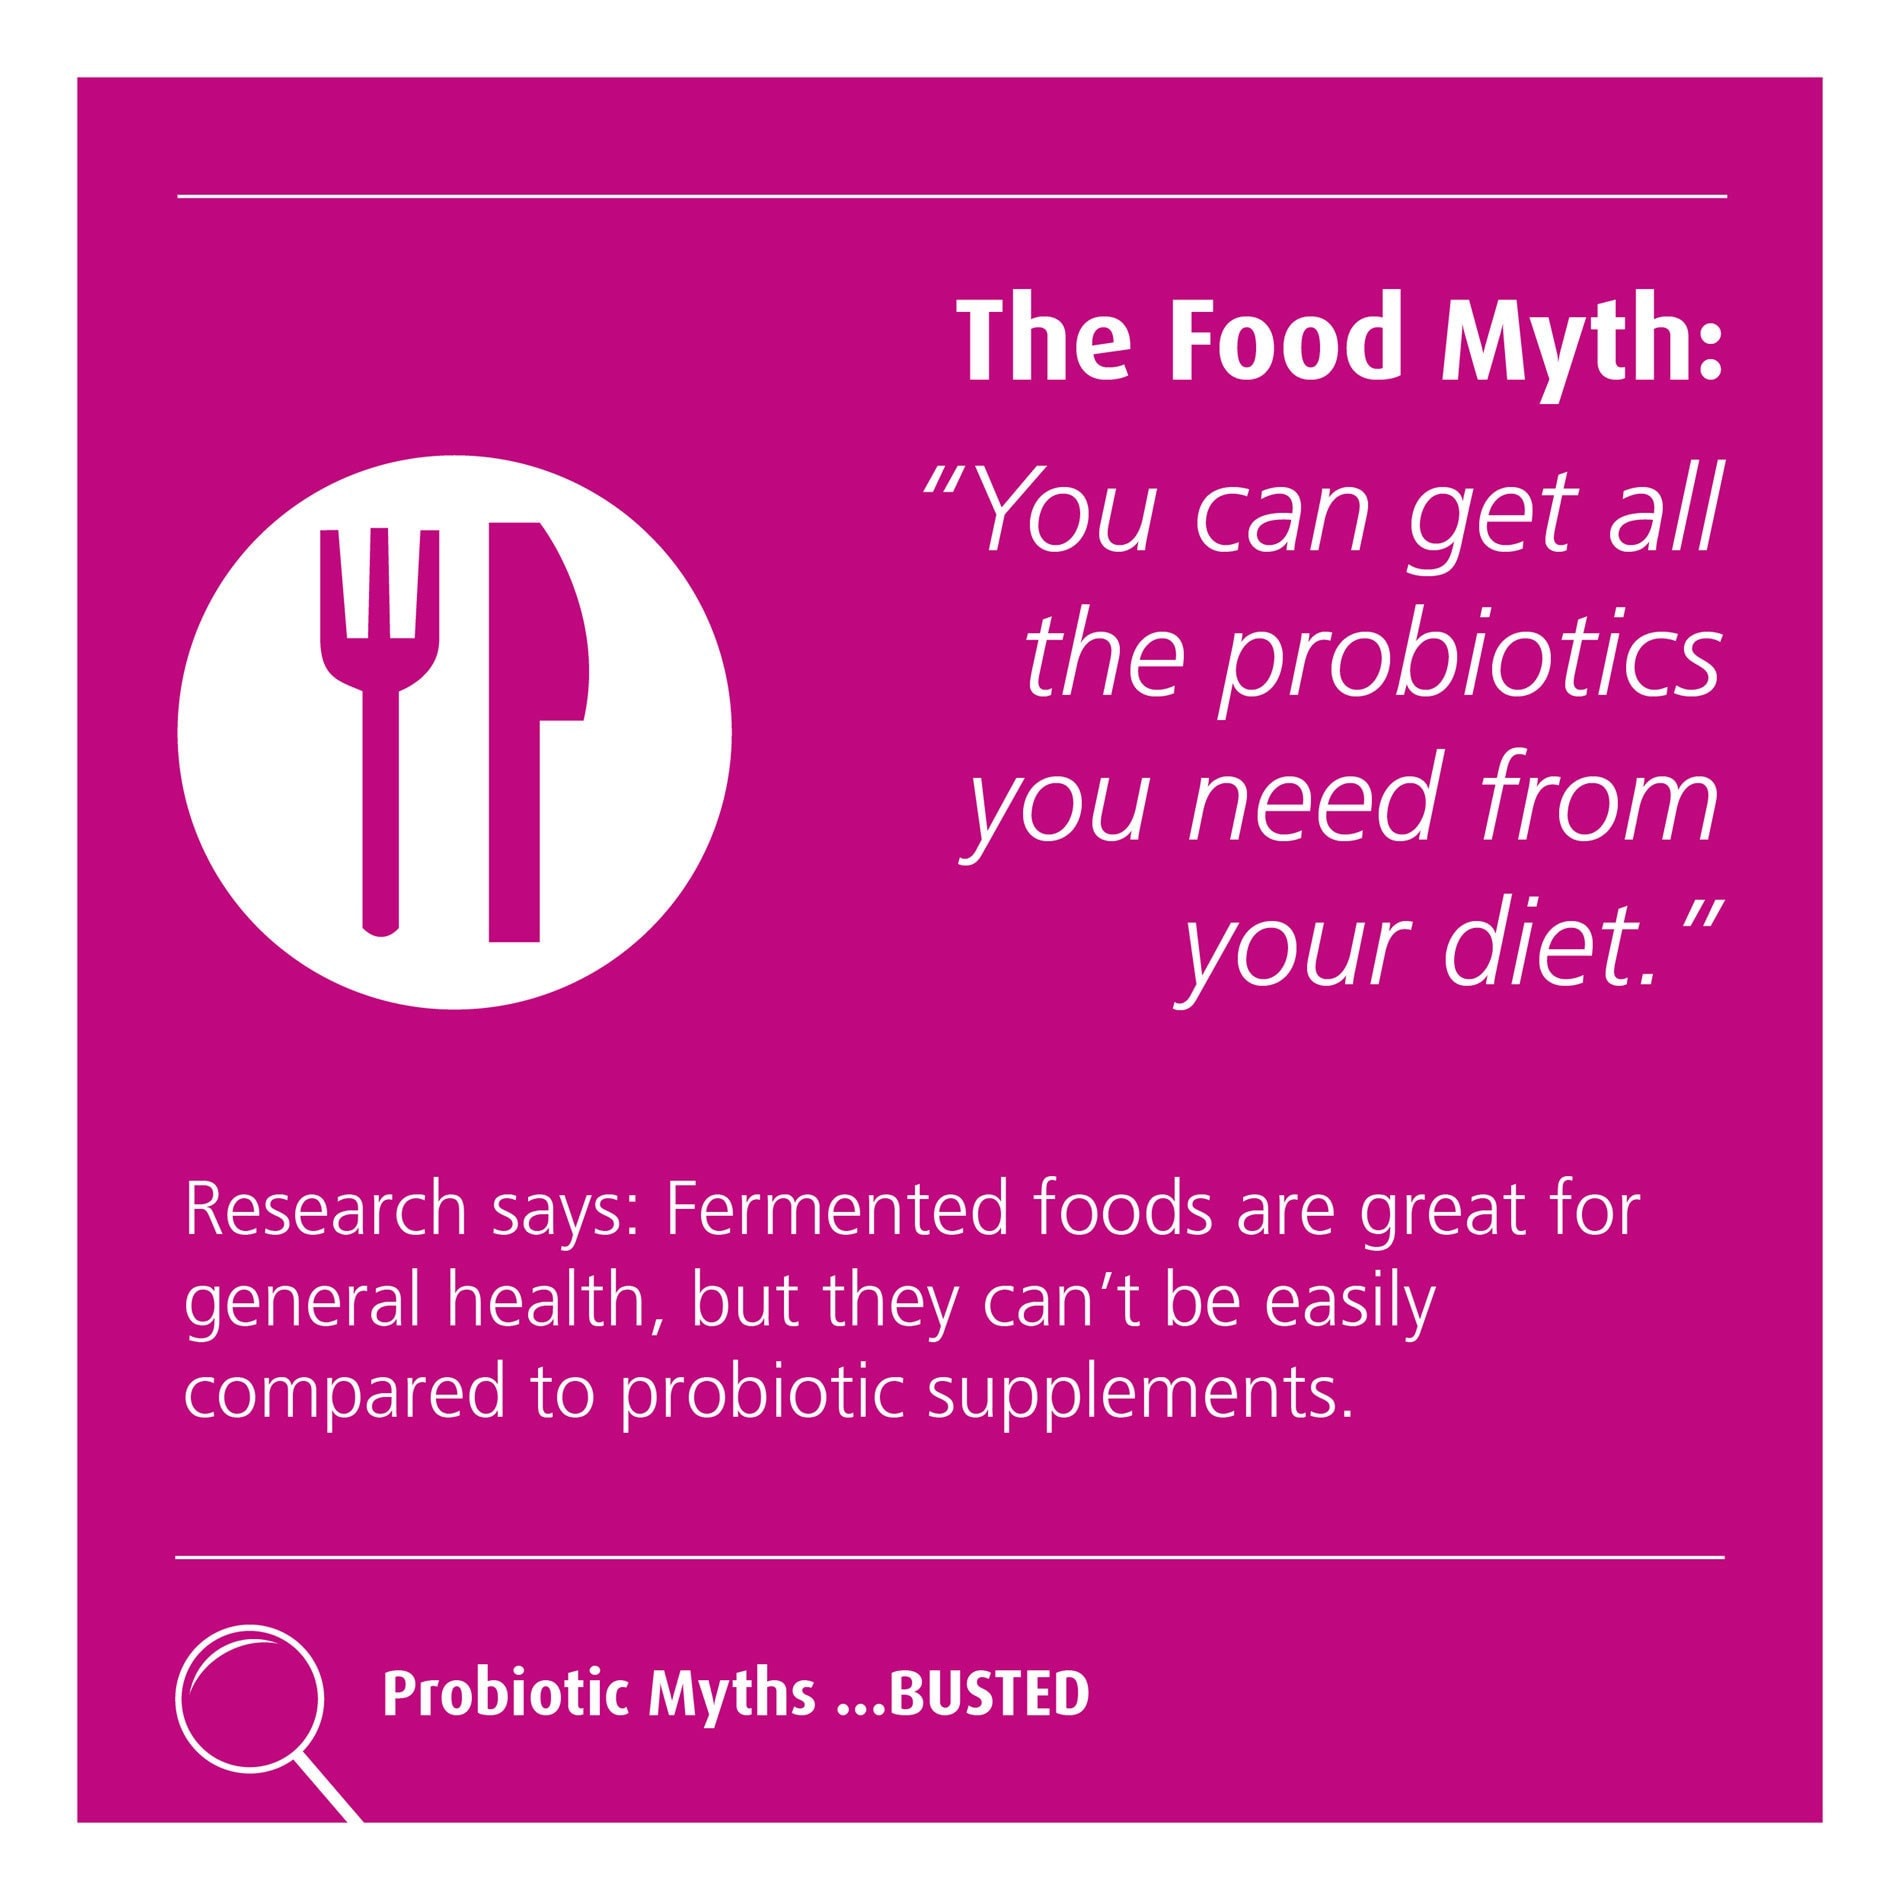 The food myth